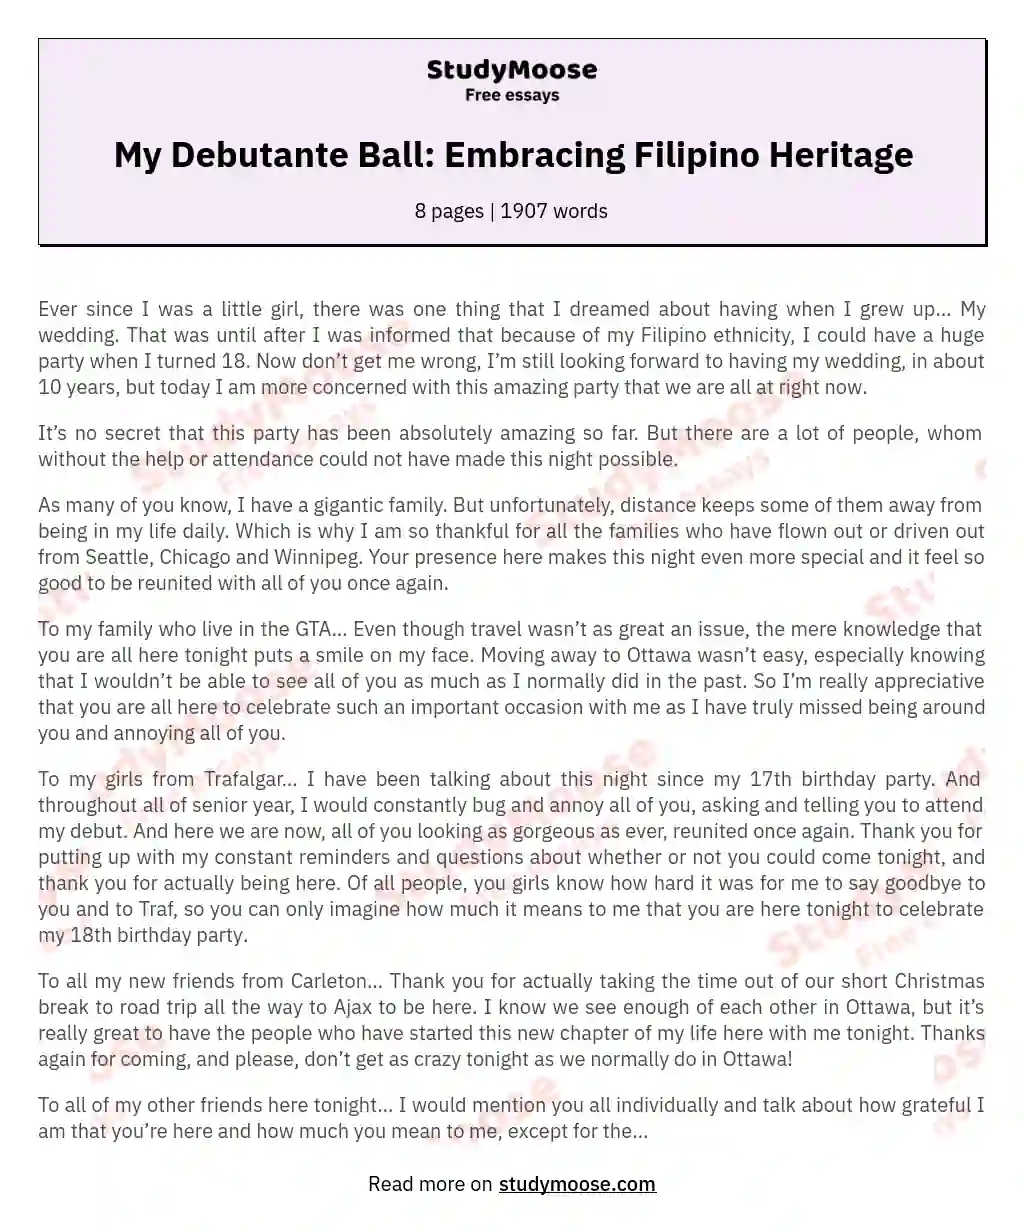 My Debutante Ball: Embracing Filipino Heritage essay